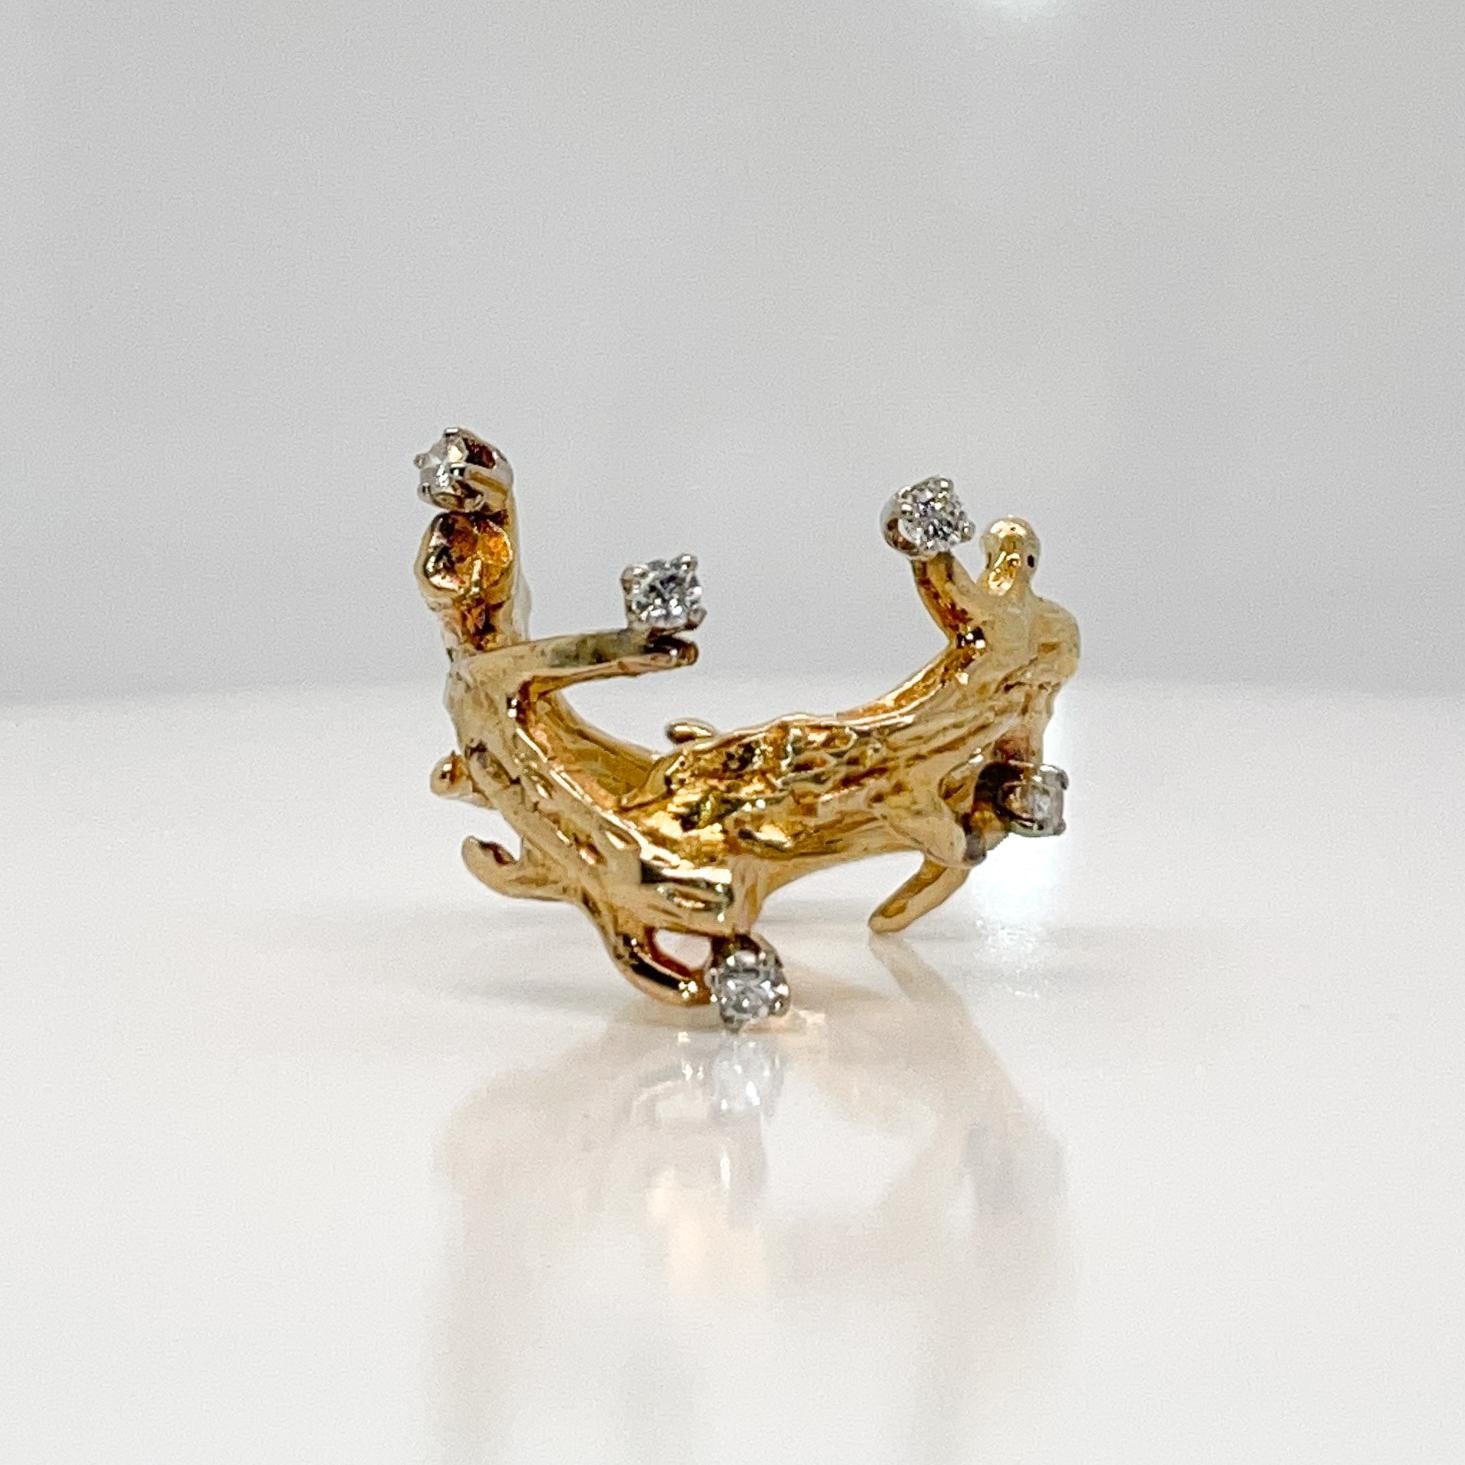 Modernist Studio Handcrafted 10 Karat Gold & Diamond Ring For Sale 5